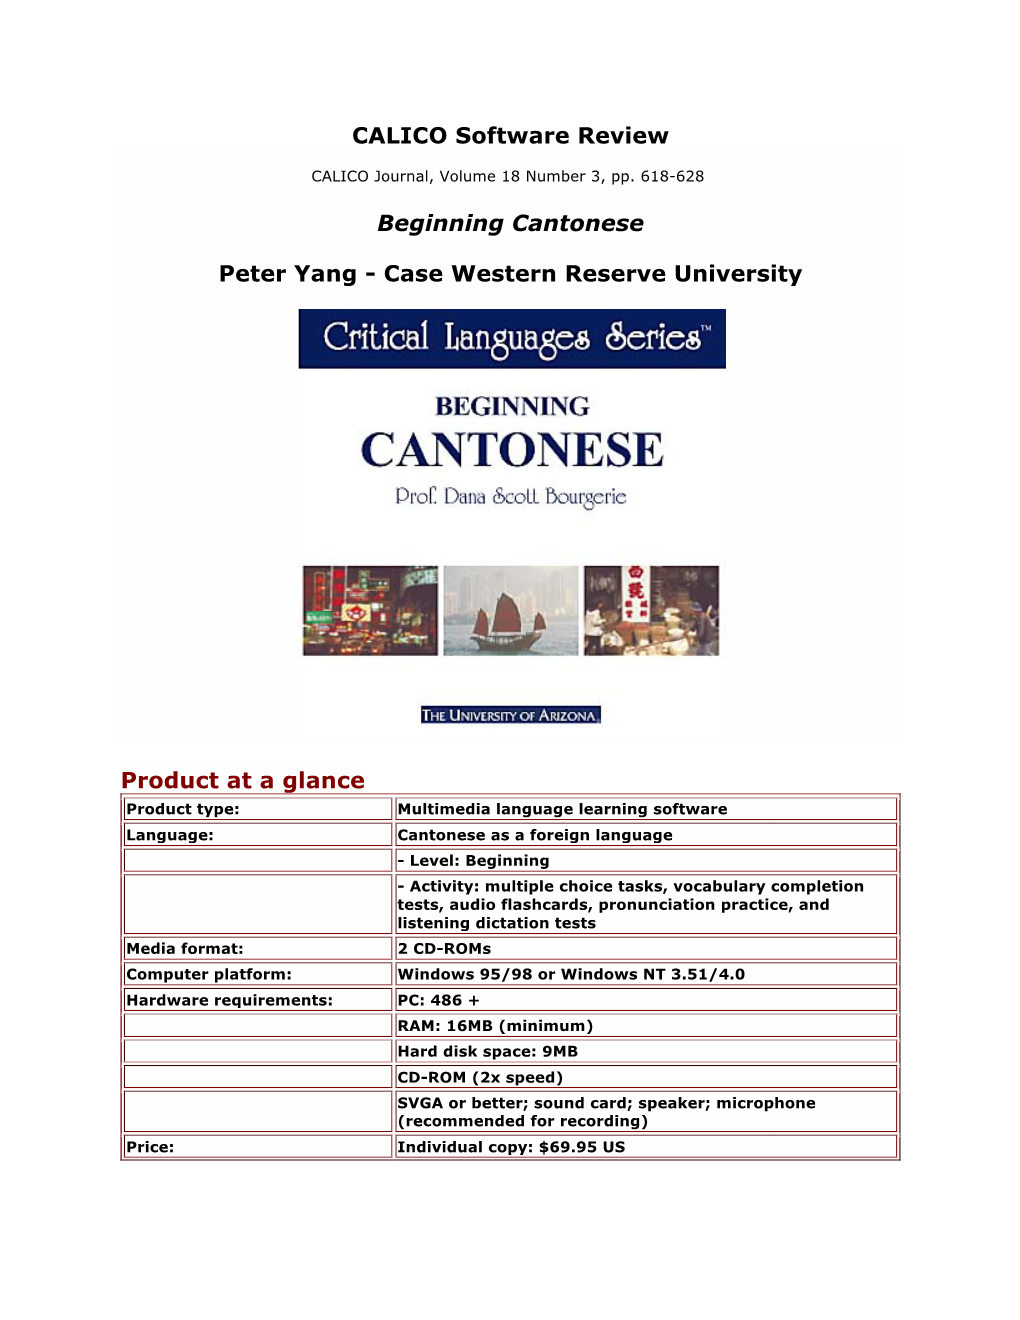 CALICO Software Review Beginning Cantonese Peter Yang